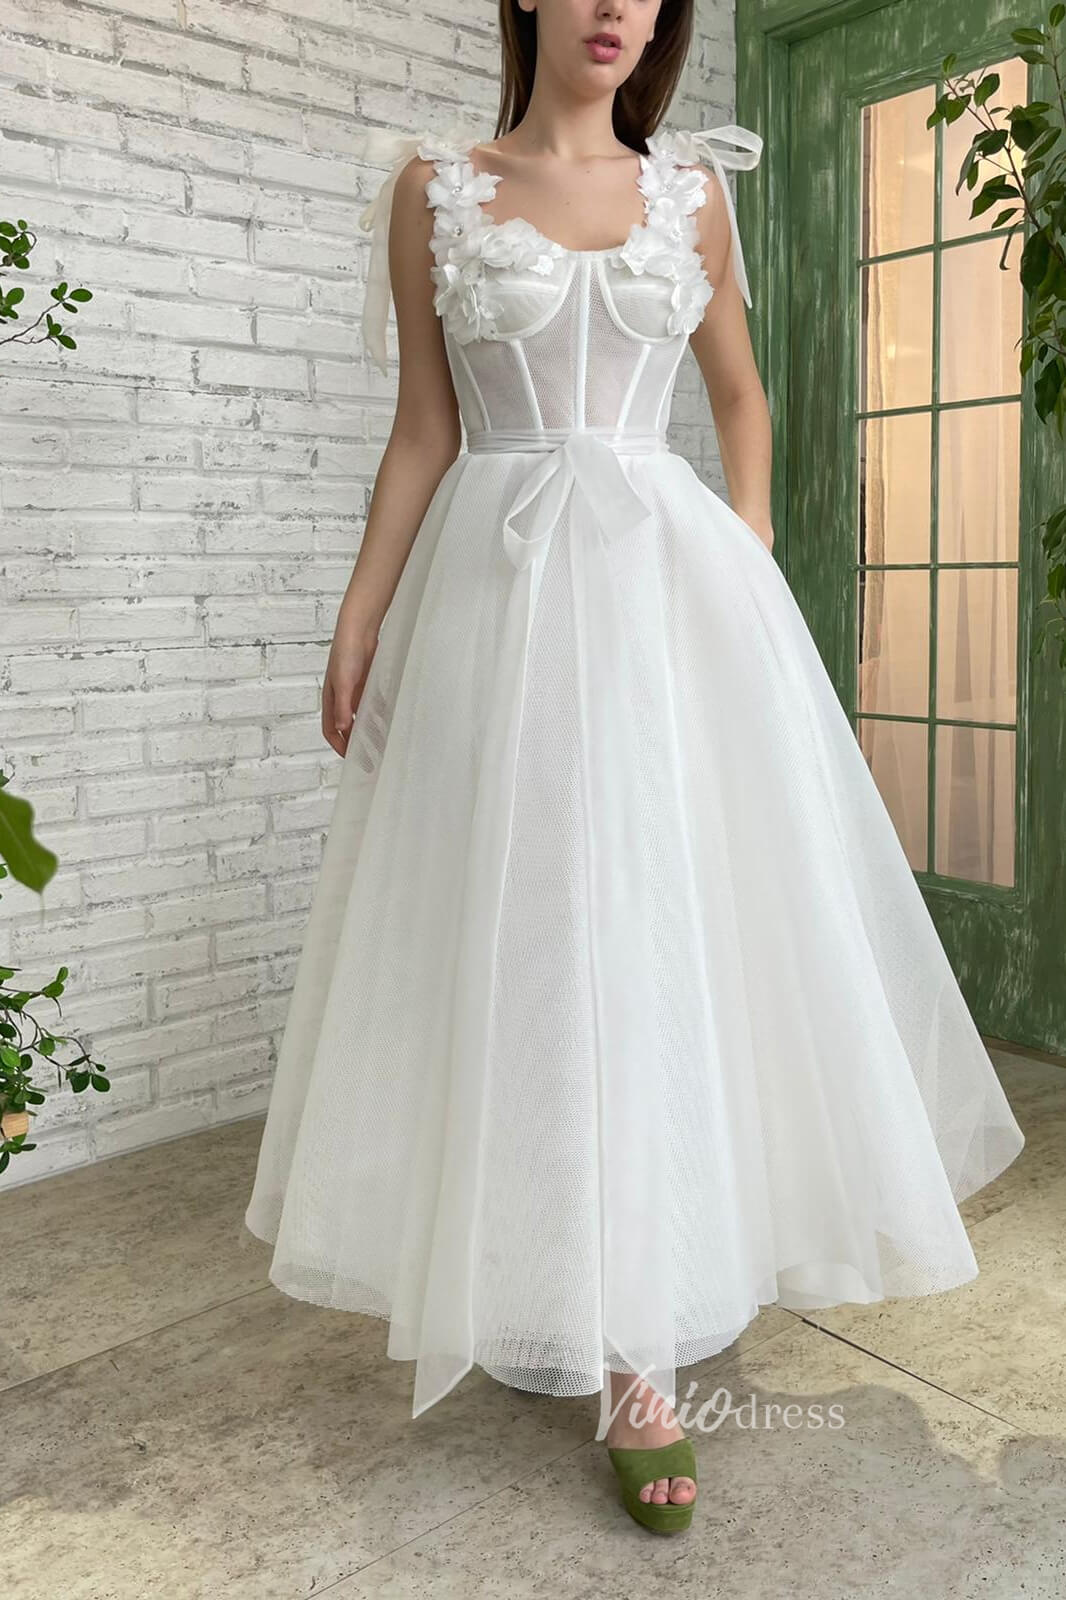 3D Flowers Prom Dresses with Pockets Ankle Length Formal Dress FD2991-prom dresses-Viniodress-Ivory-Custom Size-Viniodress